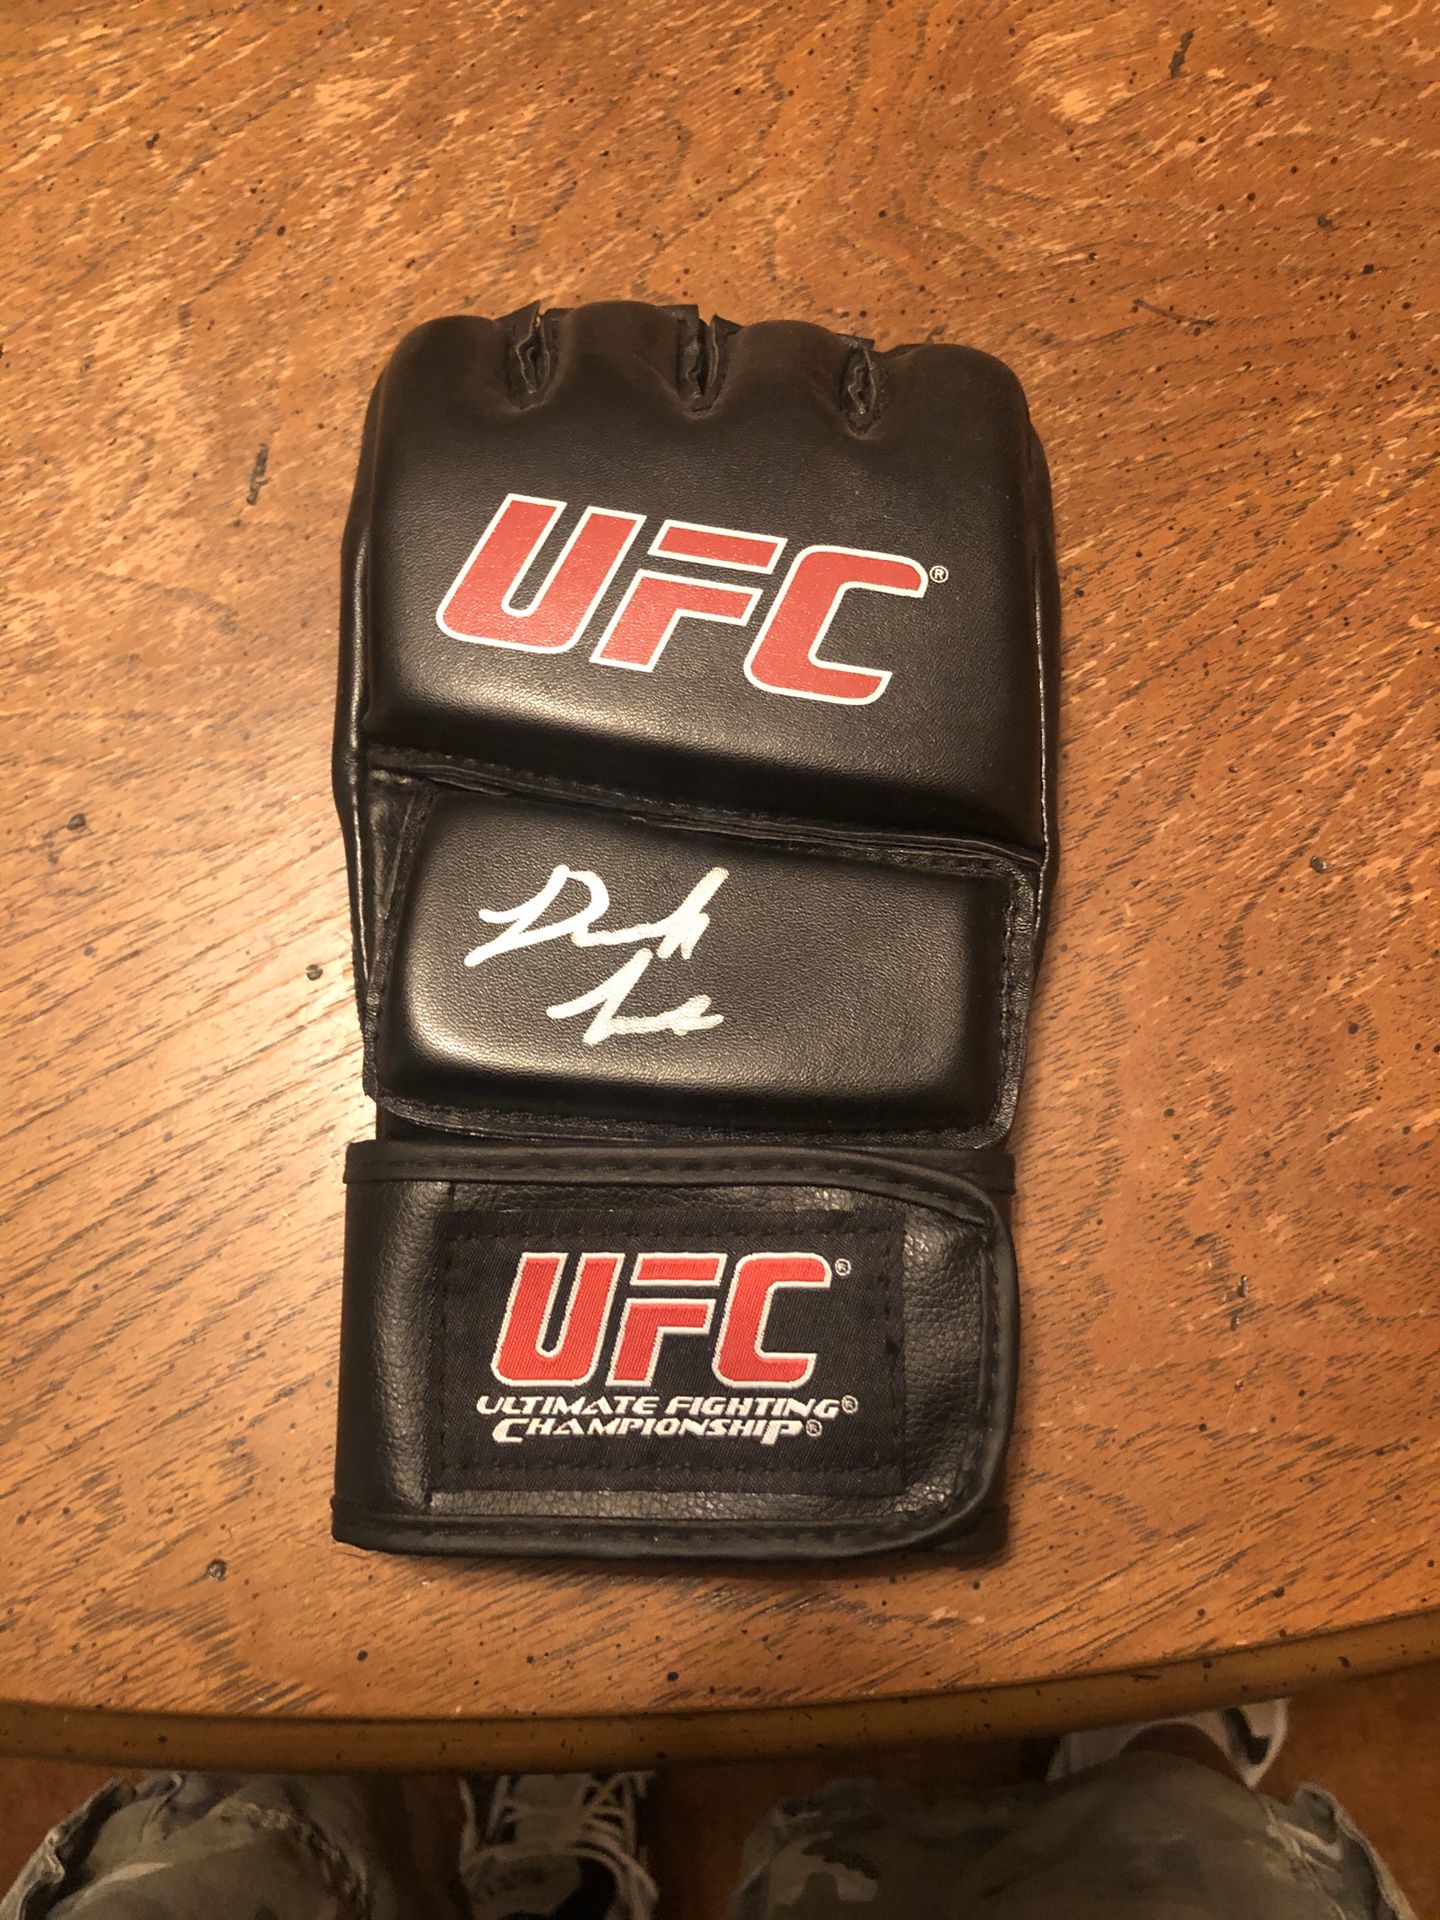 Autographed UFC glove